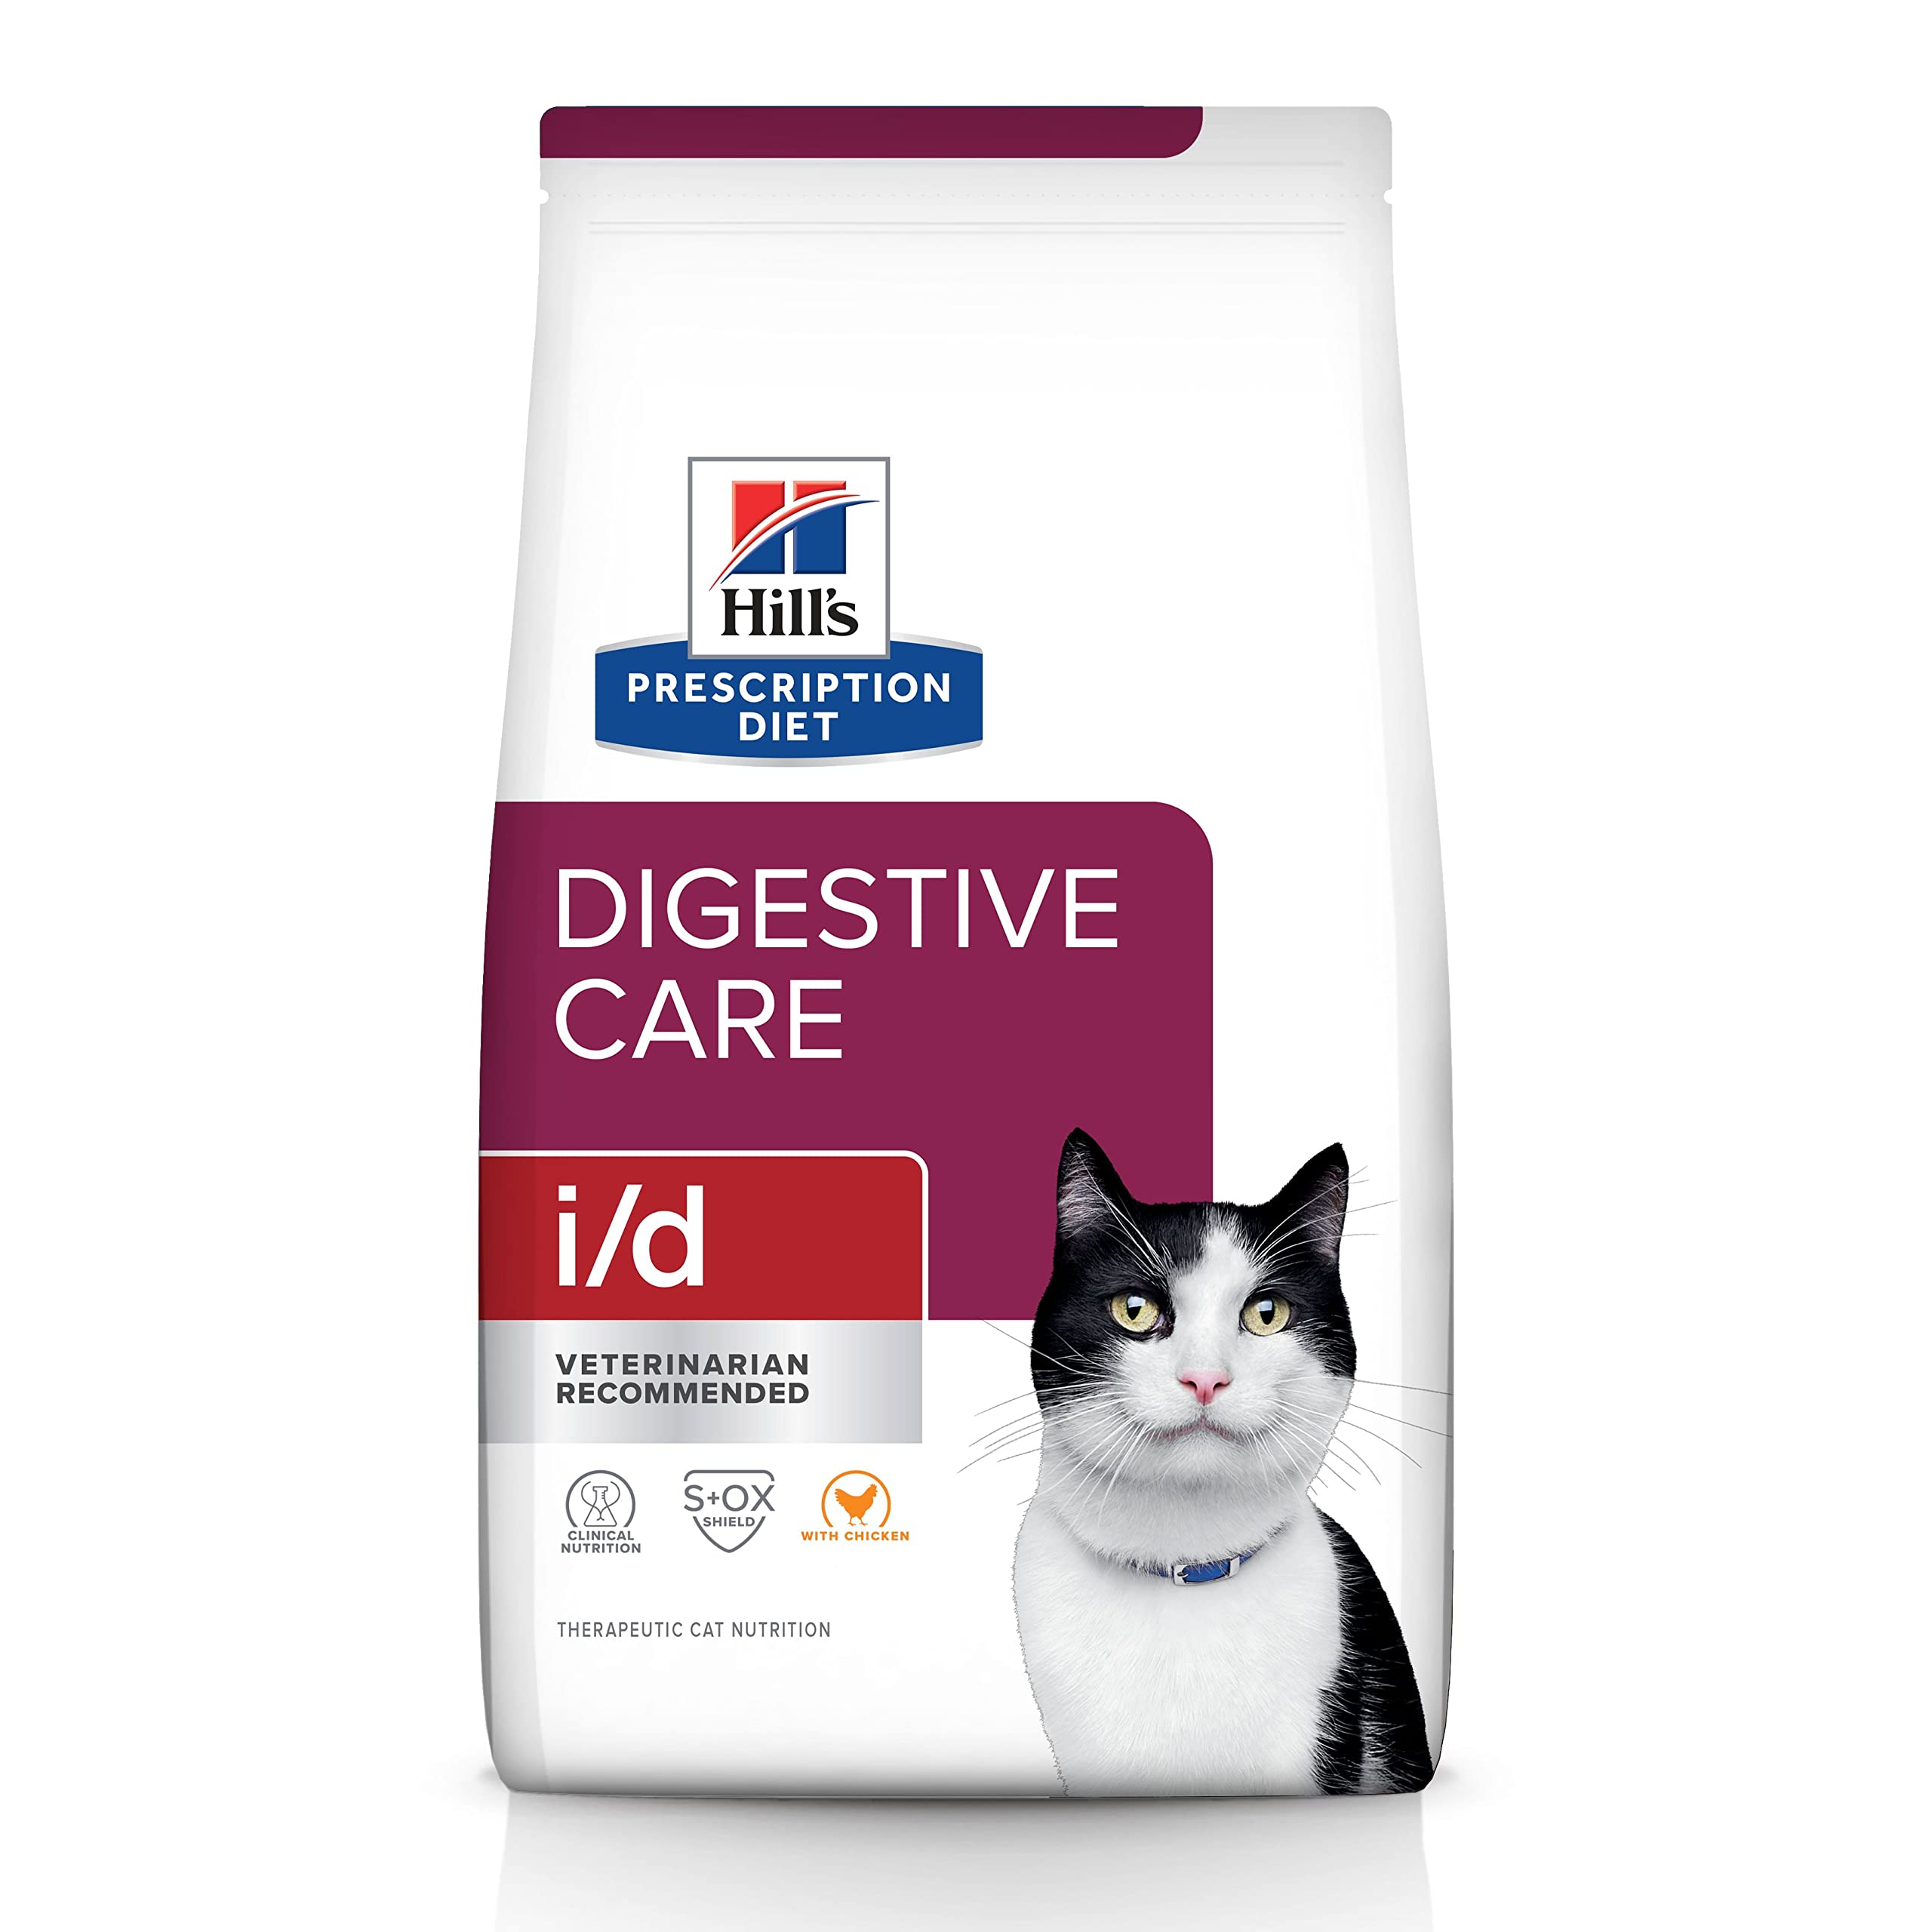 Hill's Prescription Diet i/d Digestive Care Chicken Flavor Dry Cat Food, Veterinary Diet, 4 lb. Bag